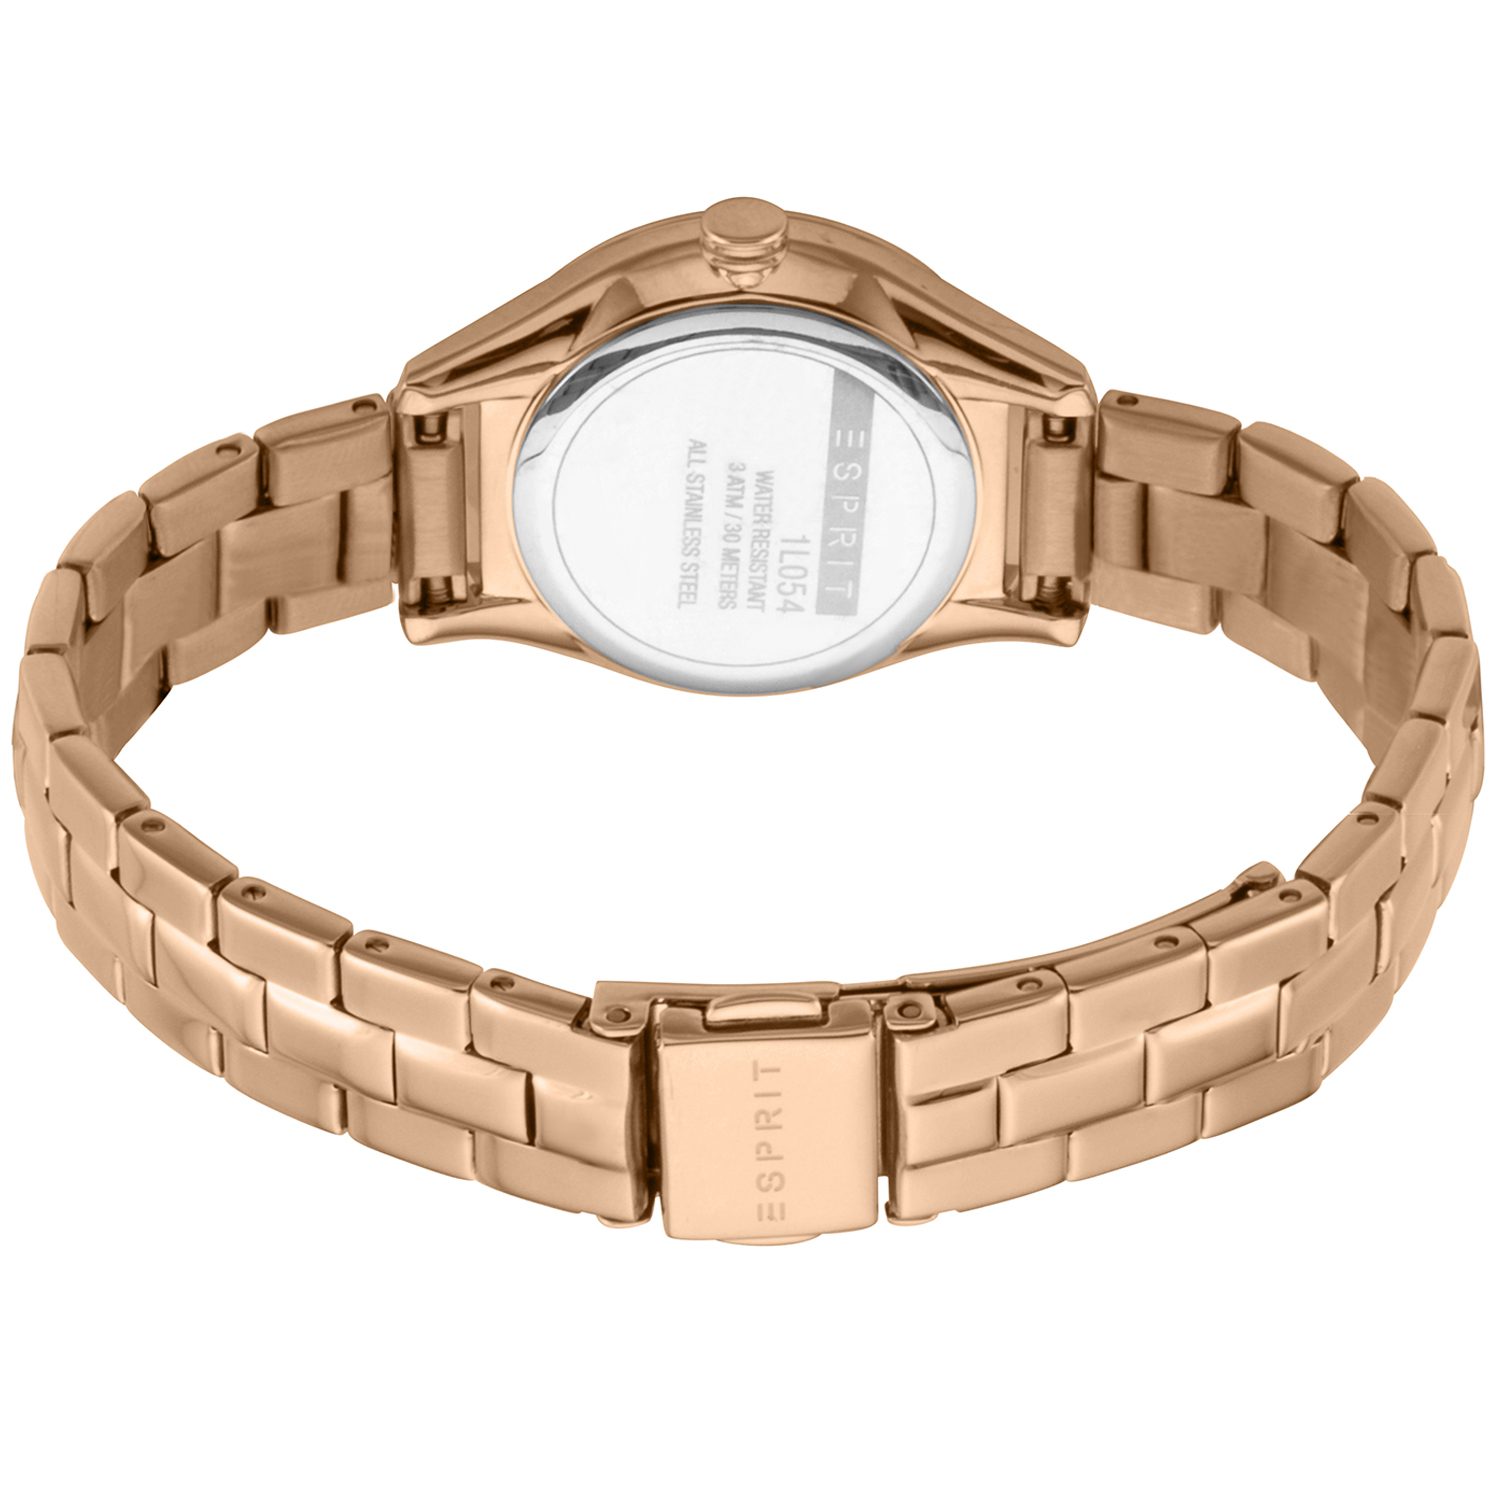 Esprit dames elegante horloge - roze goud kleur - 3ATM - polshorloge - ES1L054M0075